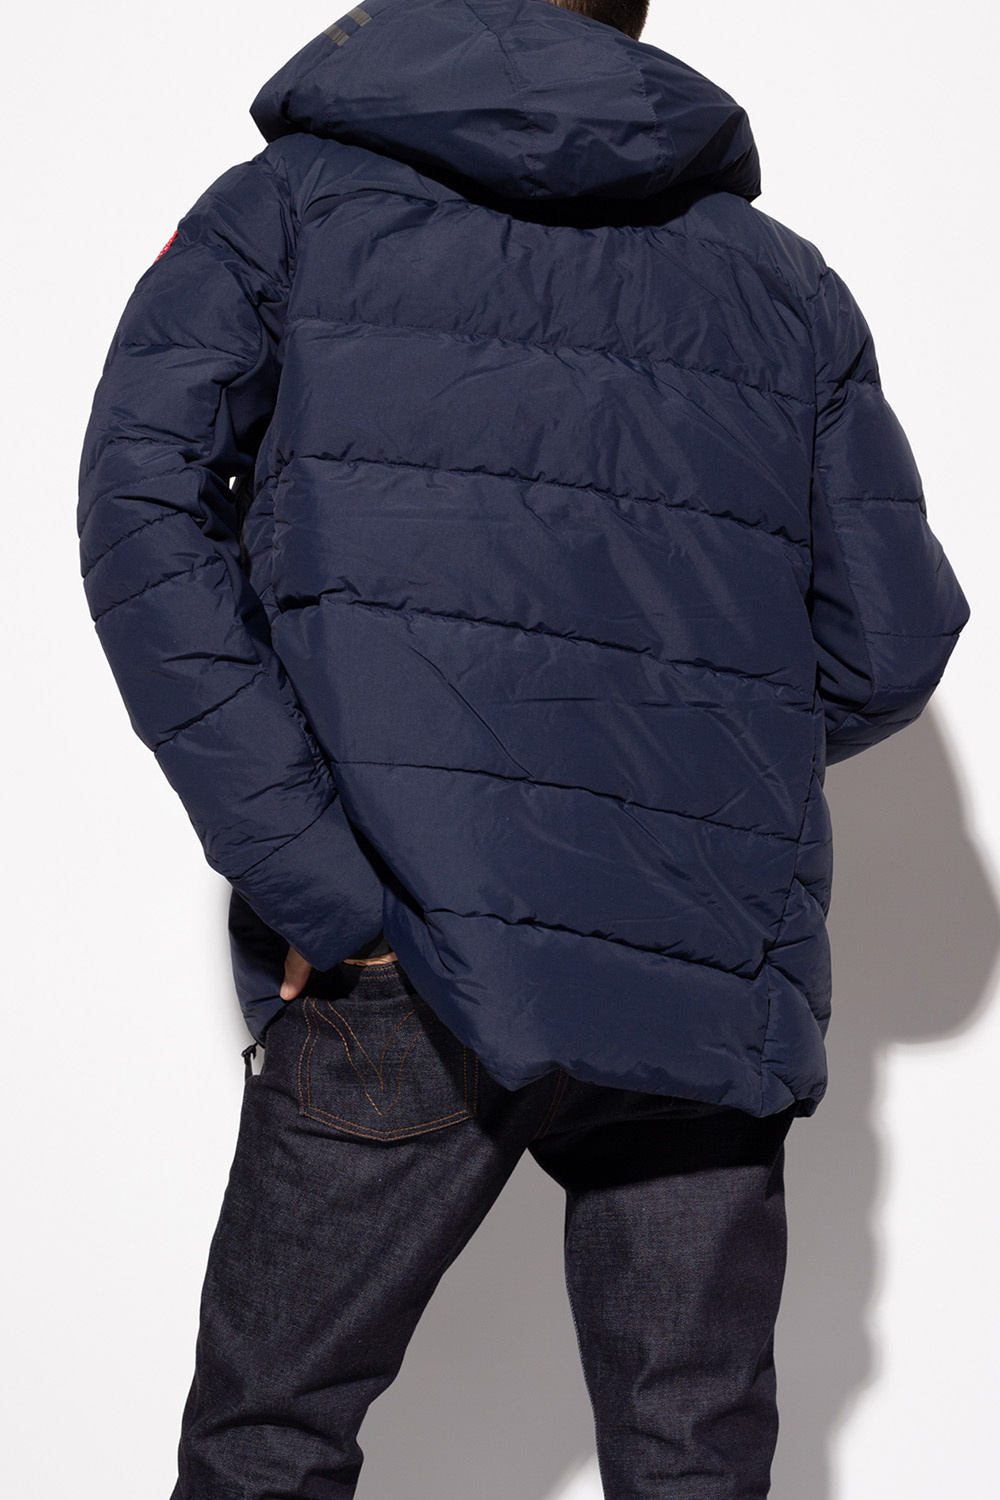 CANADA GOOSE: jacket for man - Black  Canada Goose jacket 2742M online at